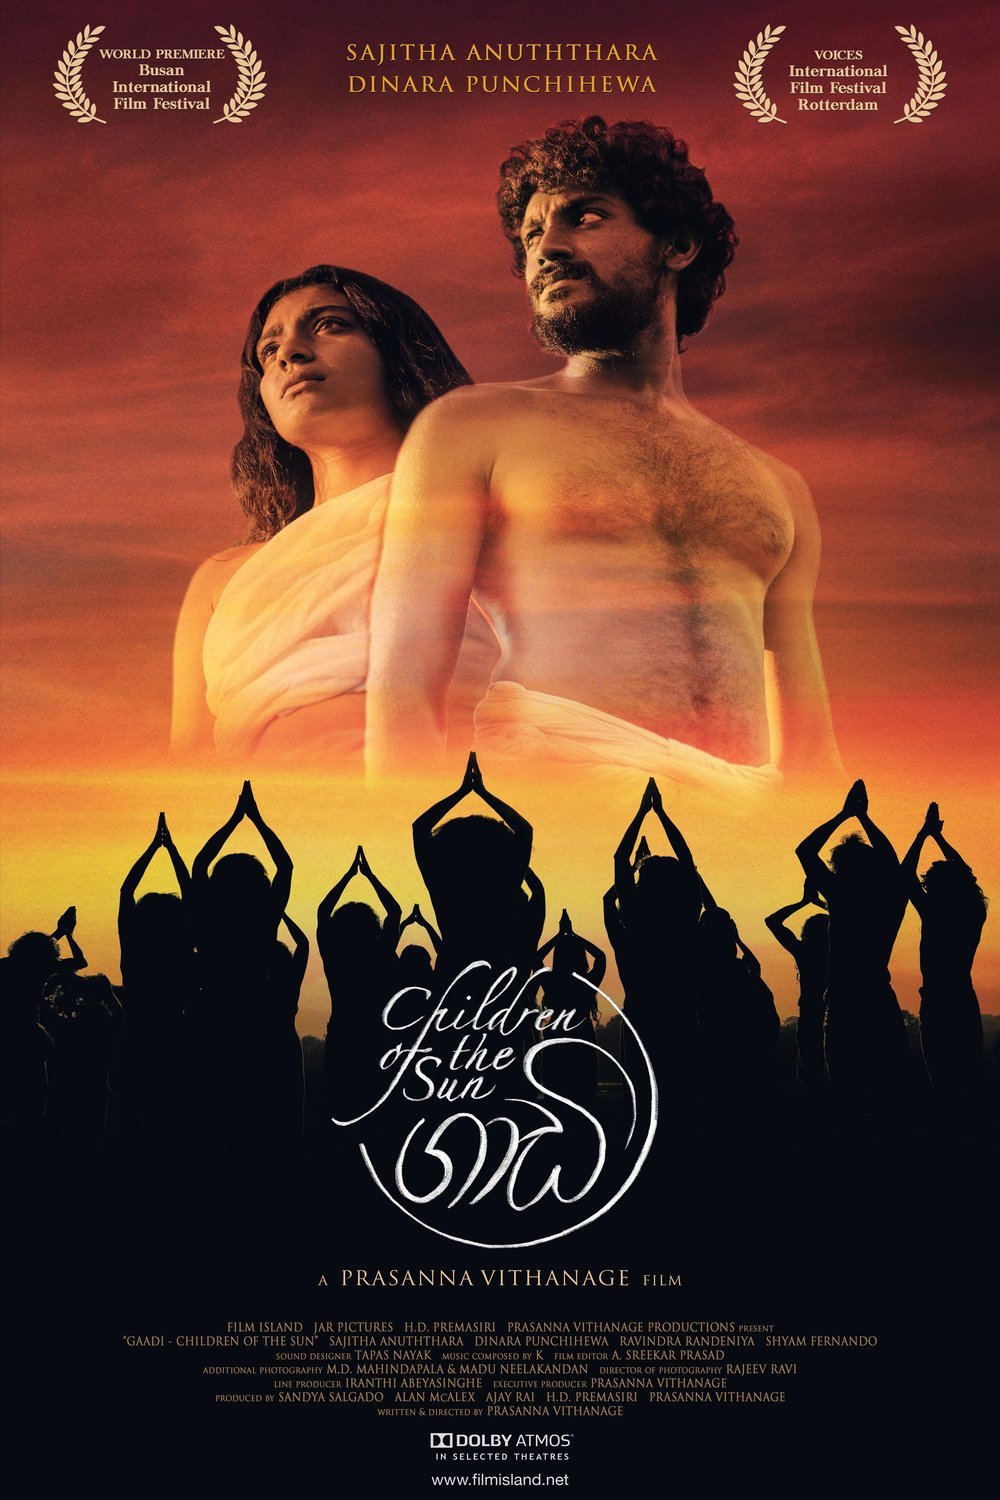 Sinhala poster of the movie Gaadi